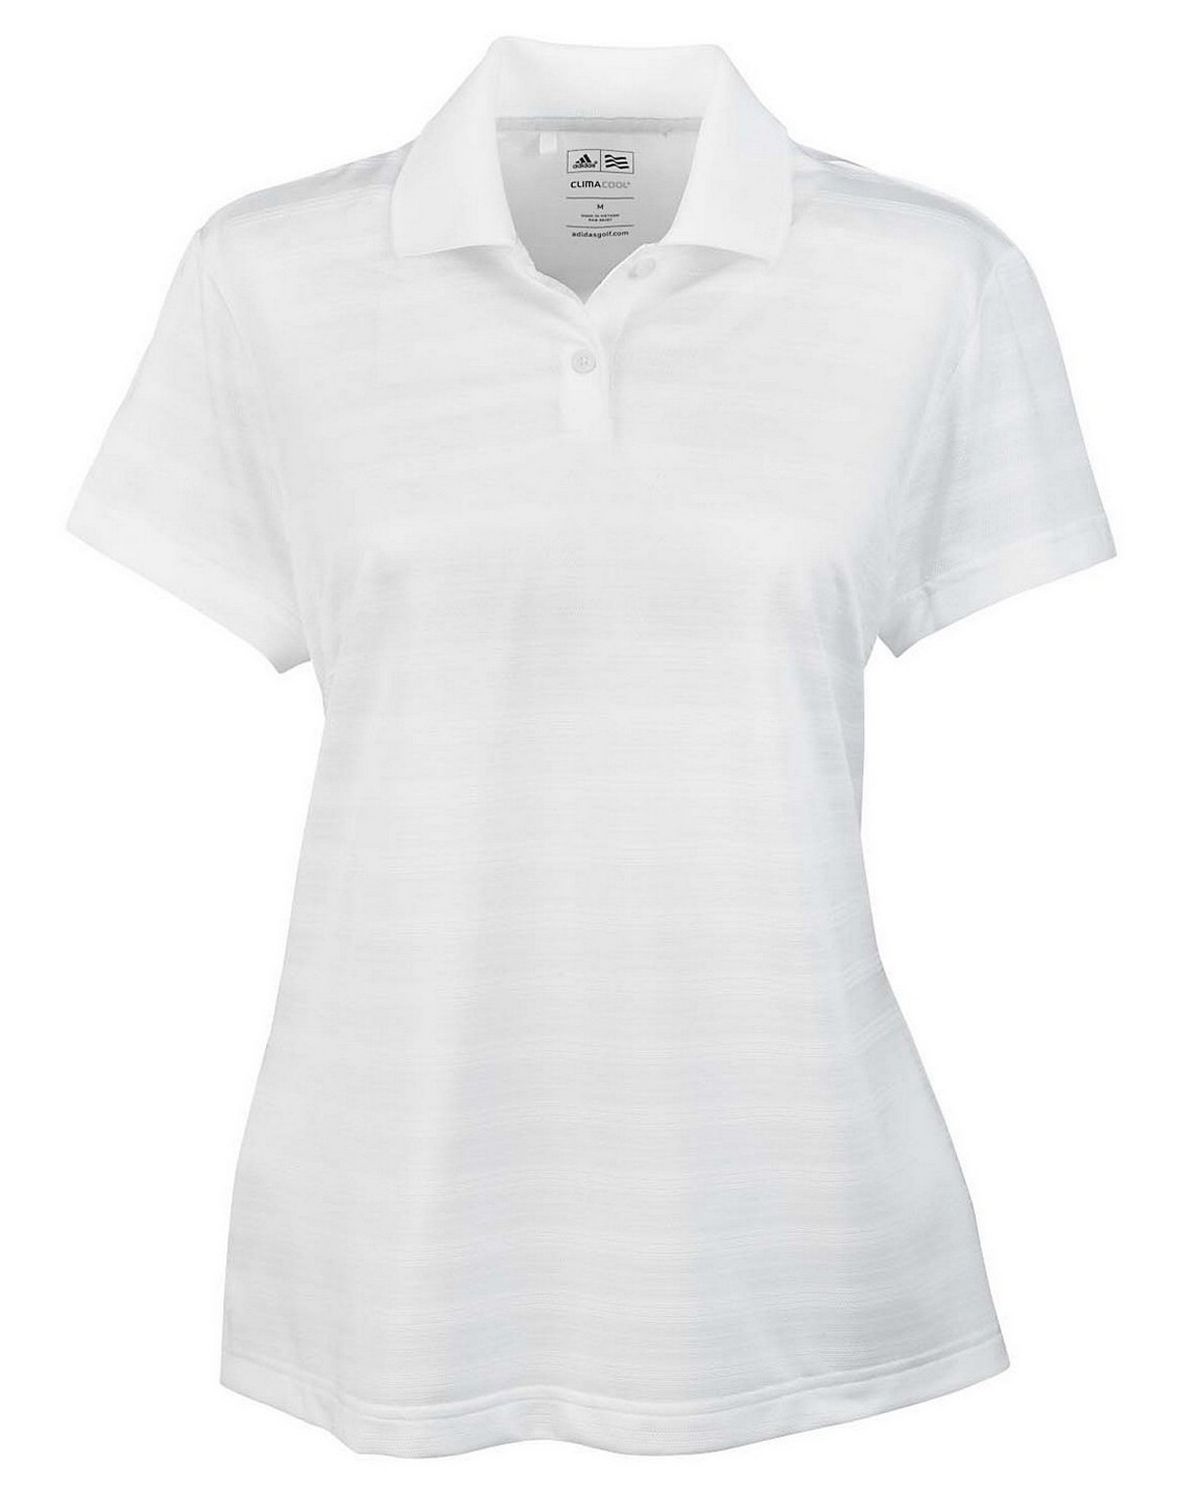 Adidas Golf A162 Women's ClimaLite Textured Short-Sleeve Polo